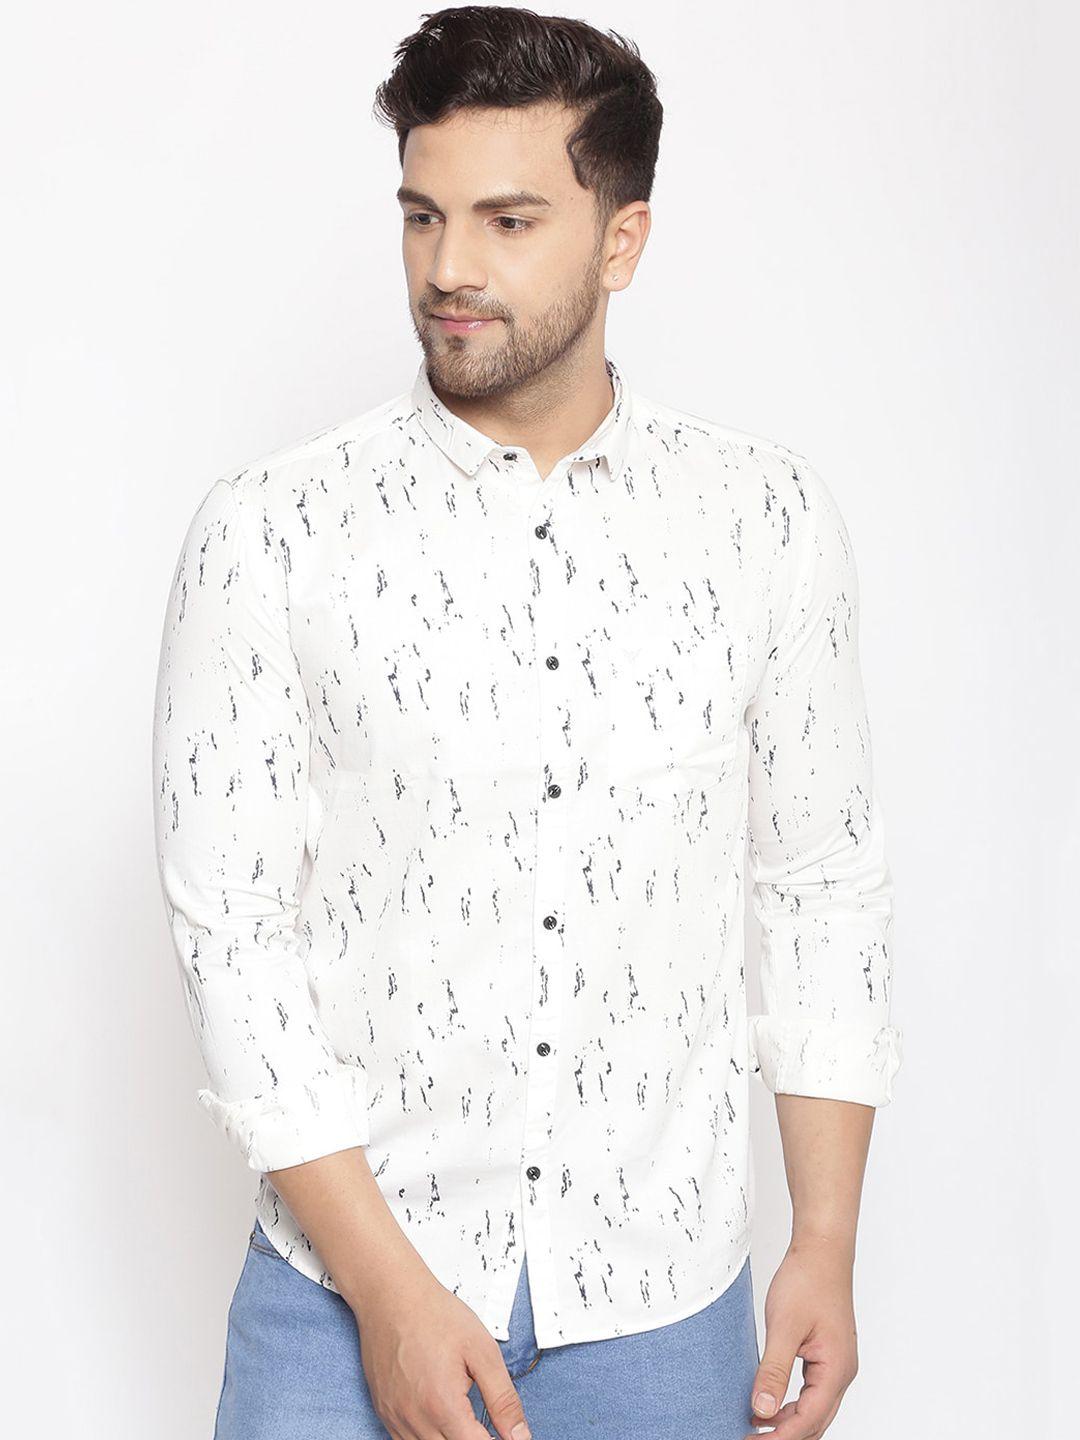 showoff-men-white-&-black-cotton-classic-slim-fit-printed-casual-shirt